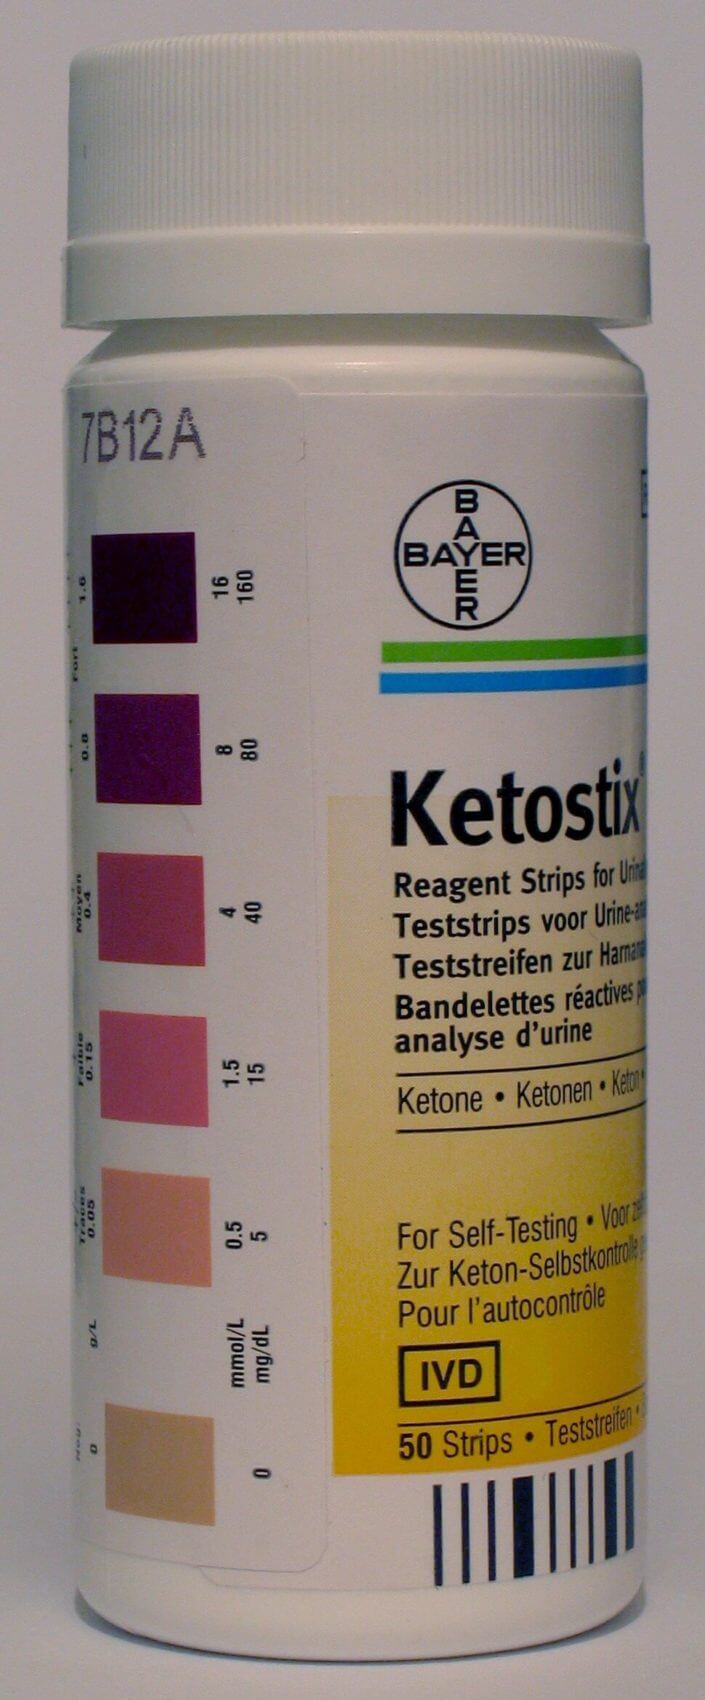 measuring ketones and ketosis